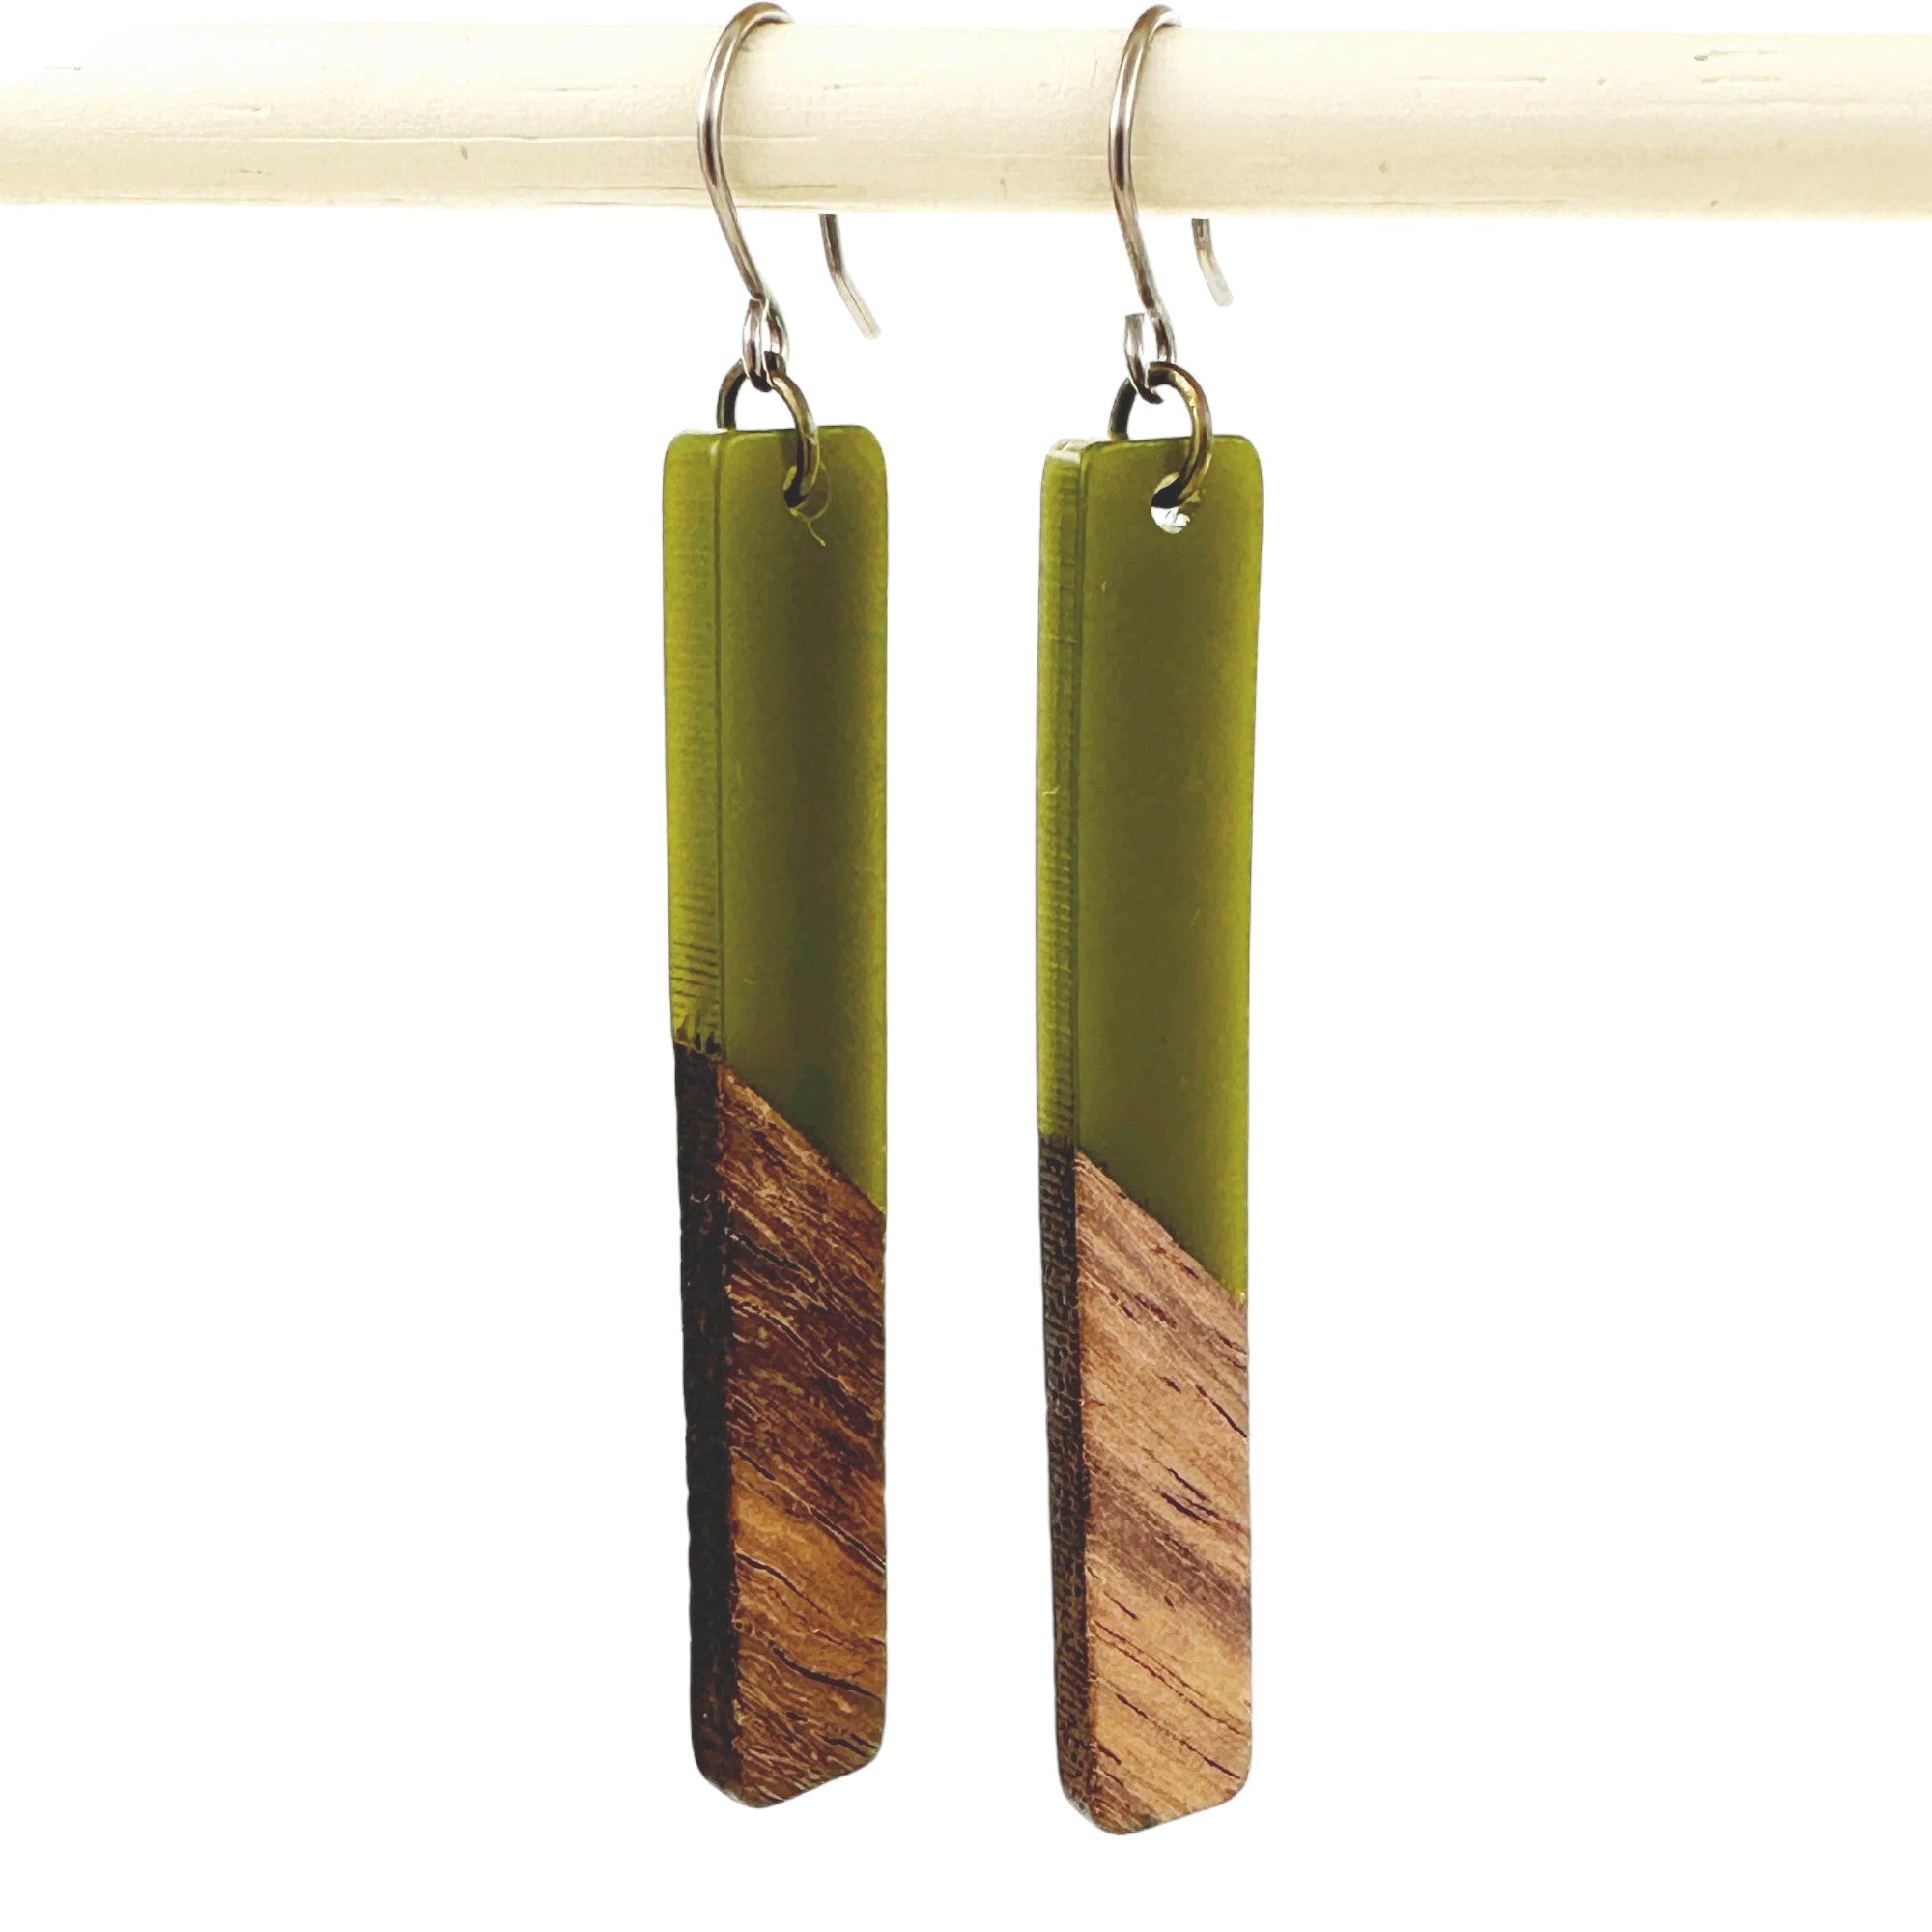 Translucent wood earrings